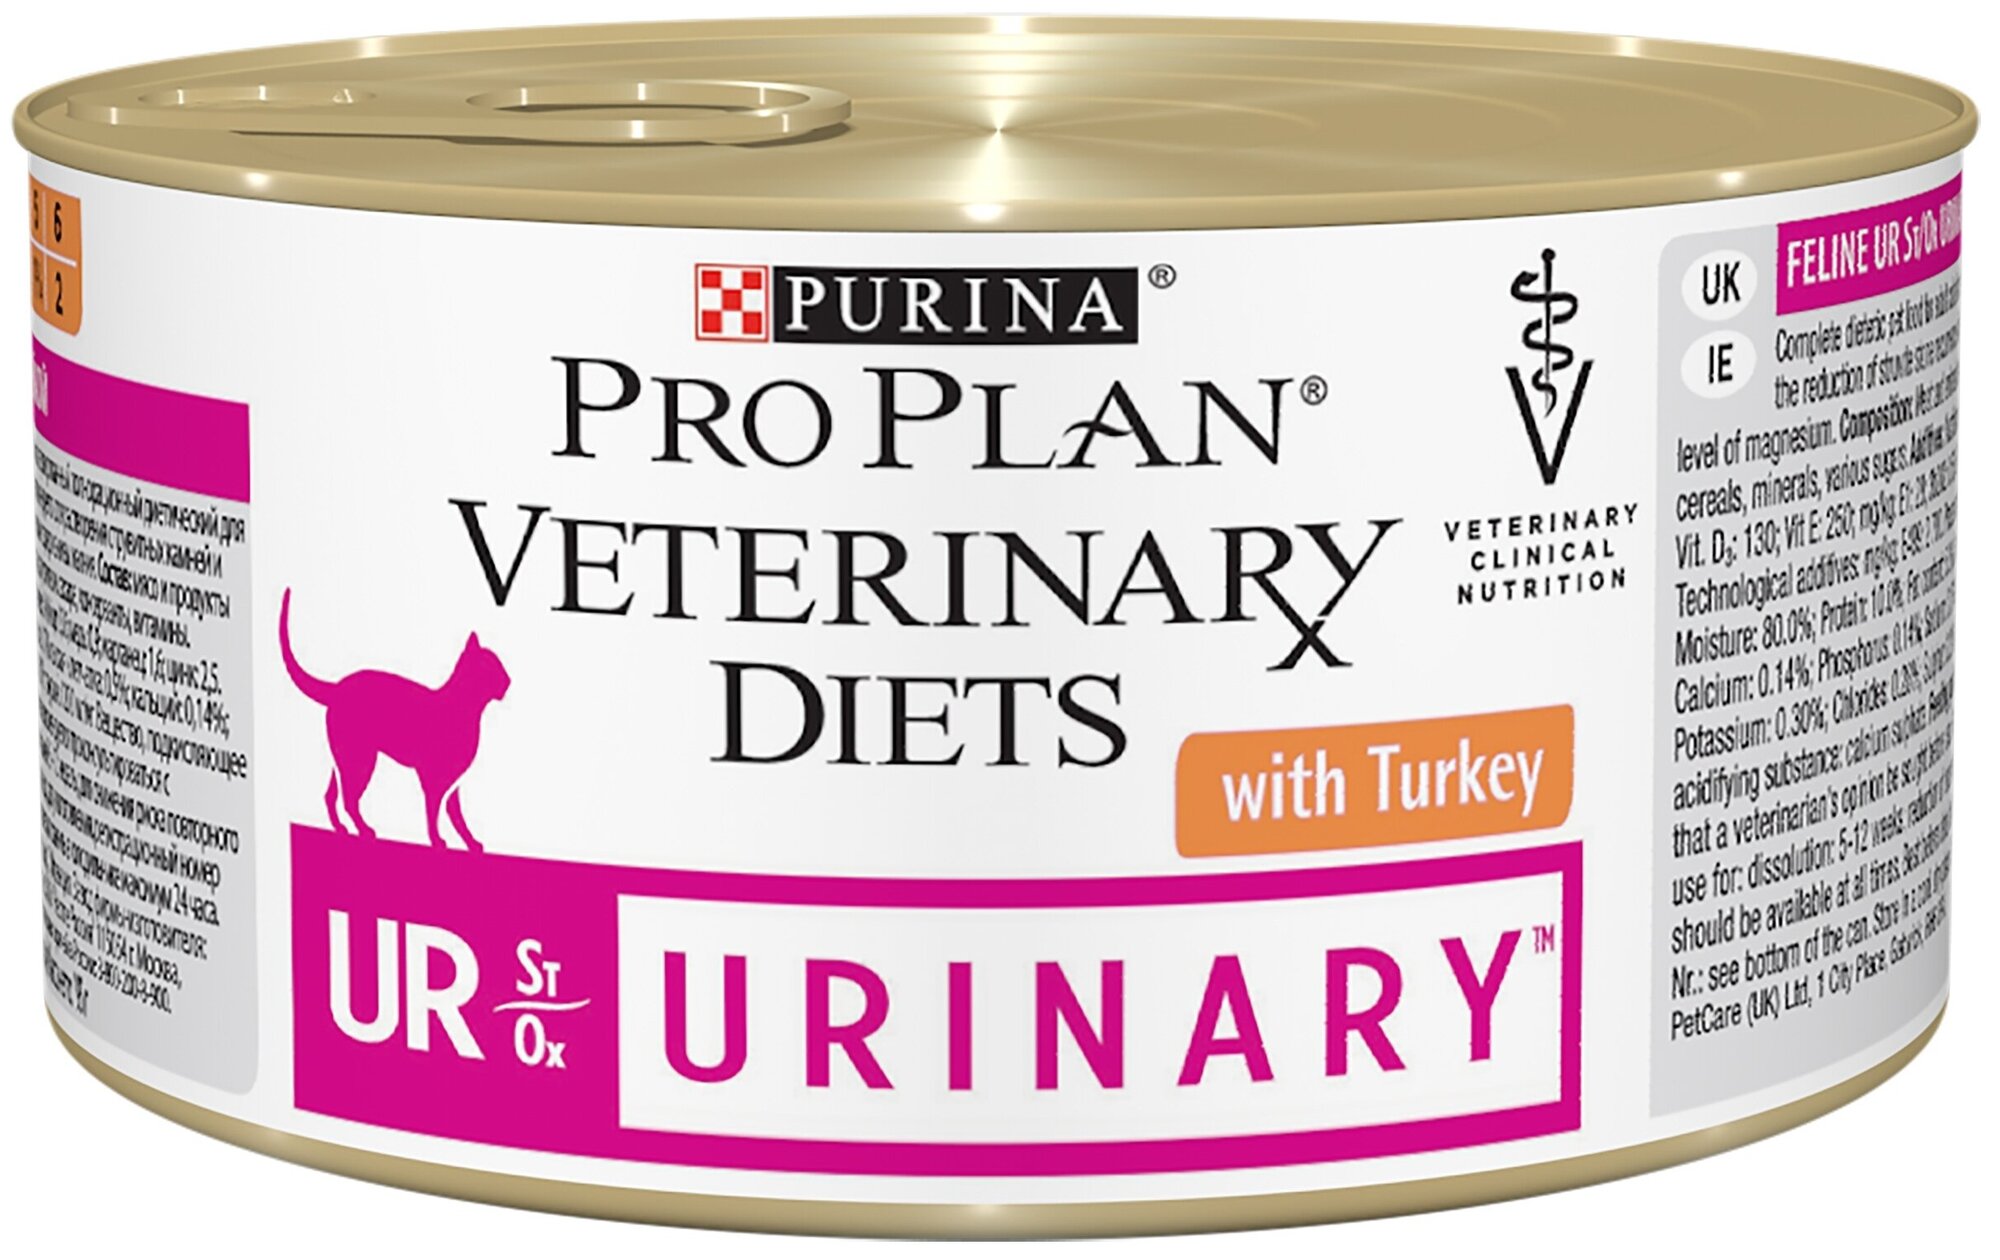 Advance veterinary diets